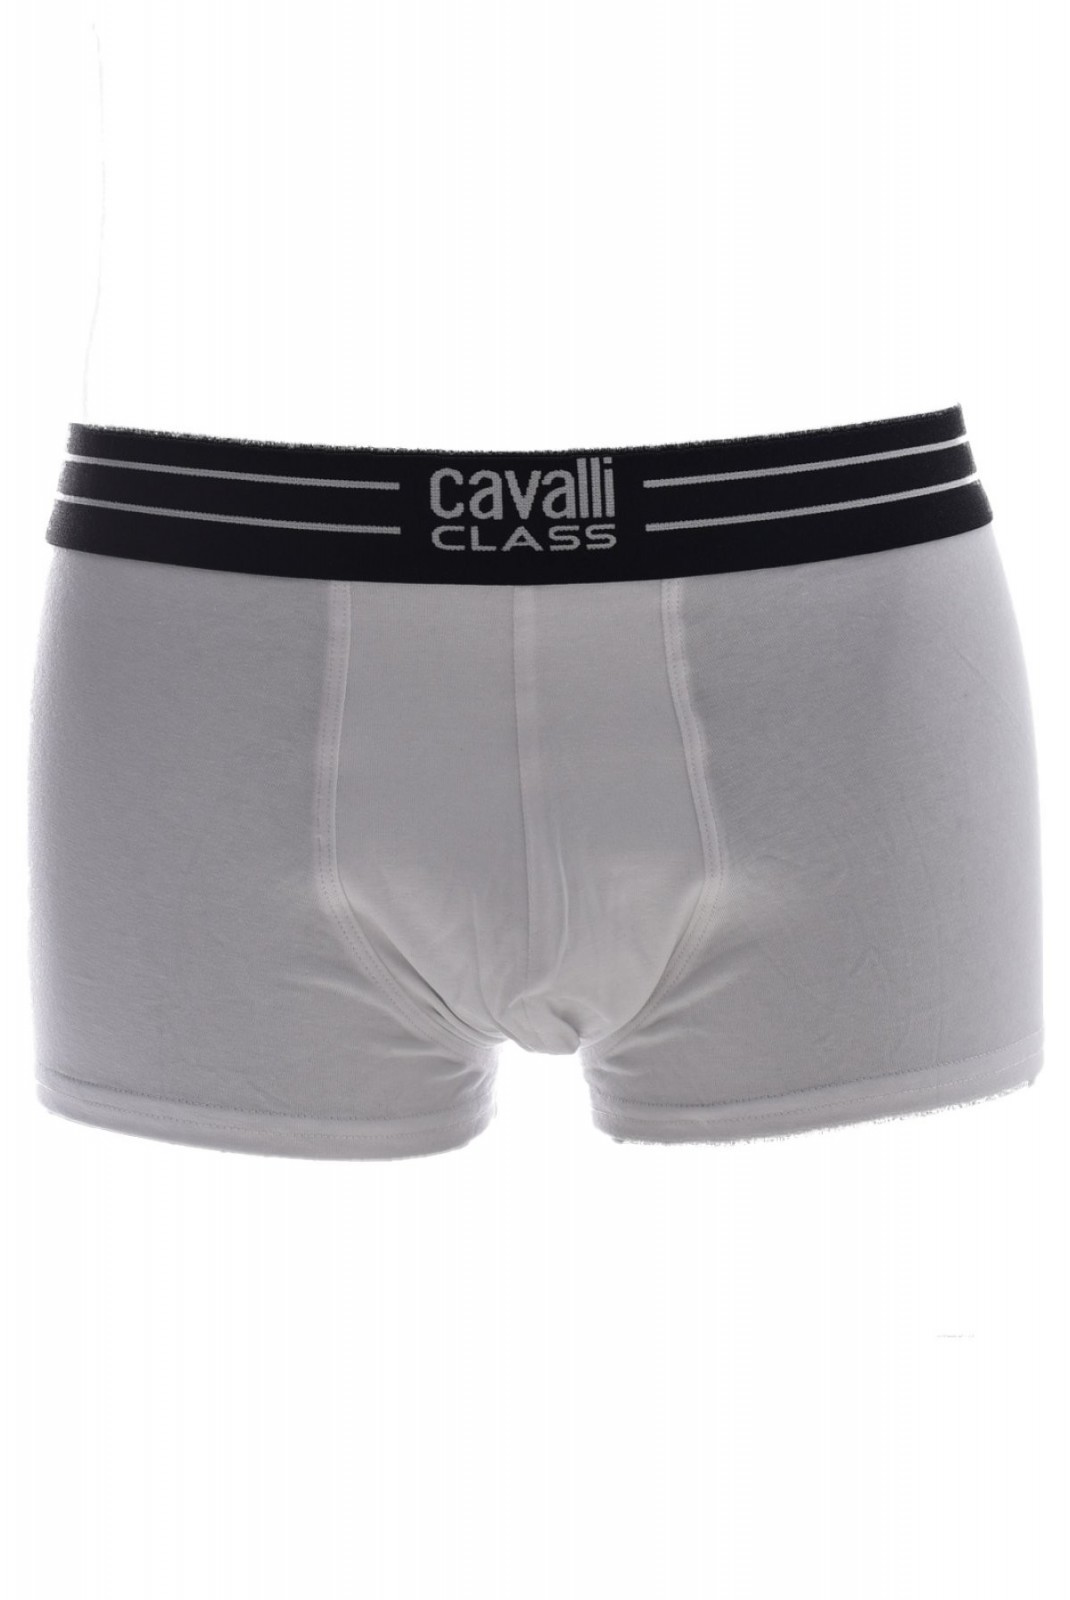 Tripack boxers stretch Cavalli Class WHITE QXO01B JD003